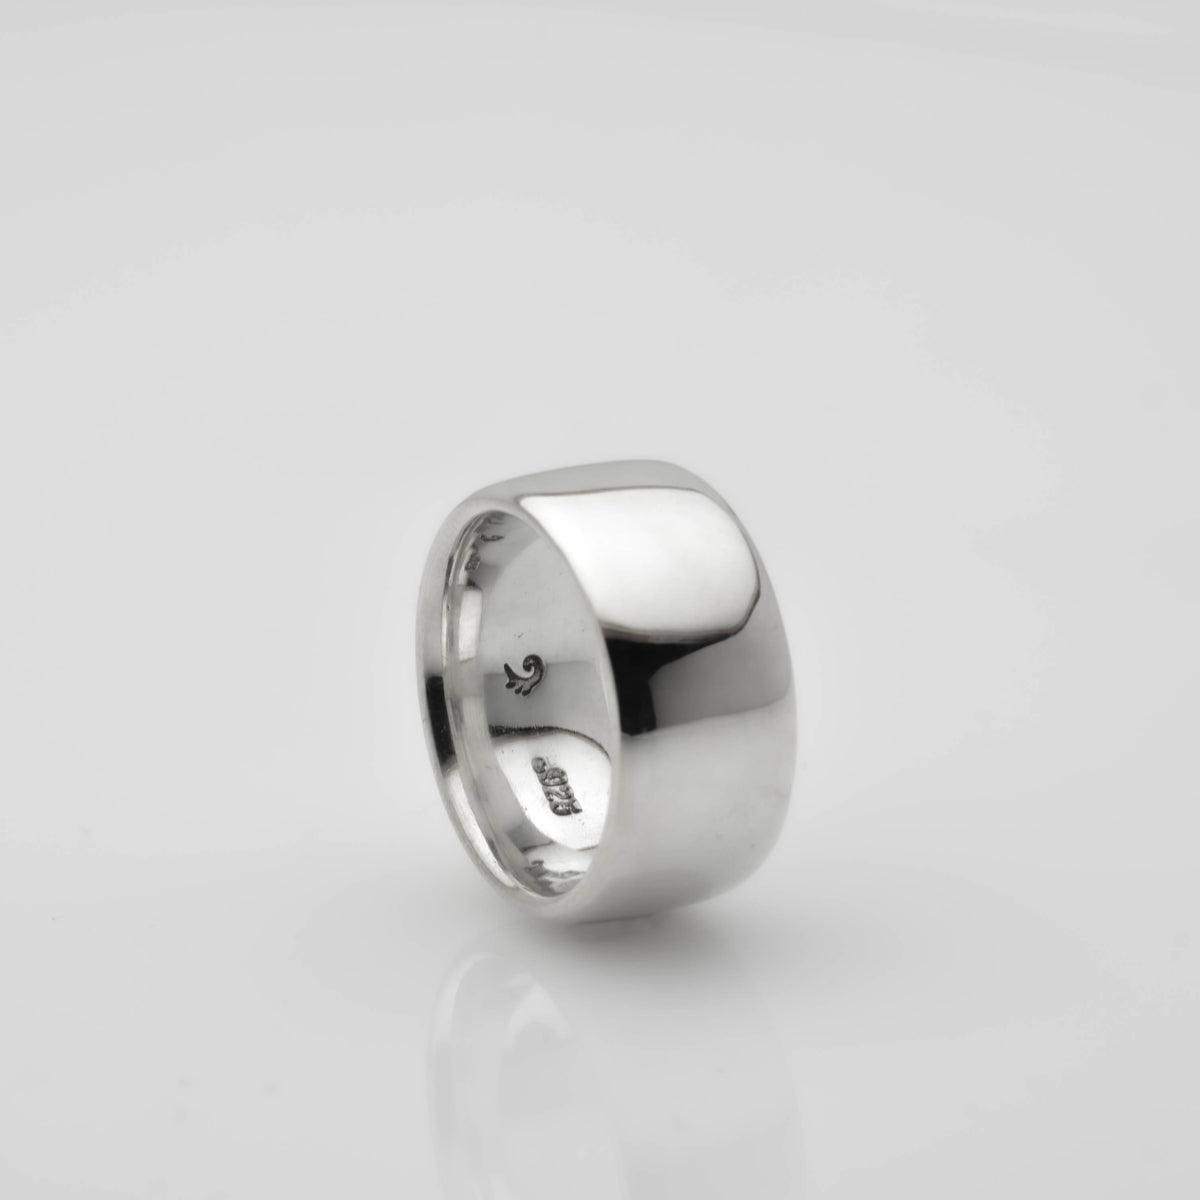 Stylish Greek Key or Meander Sterling Silver Ring - 10 | eBay